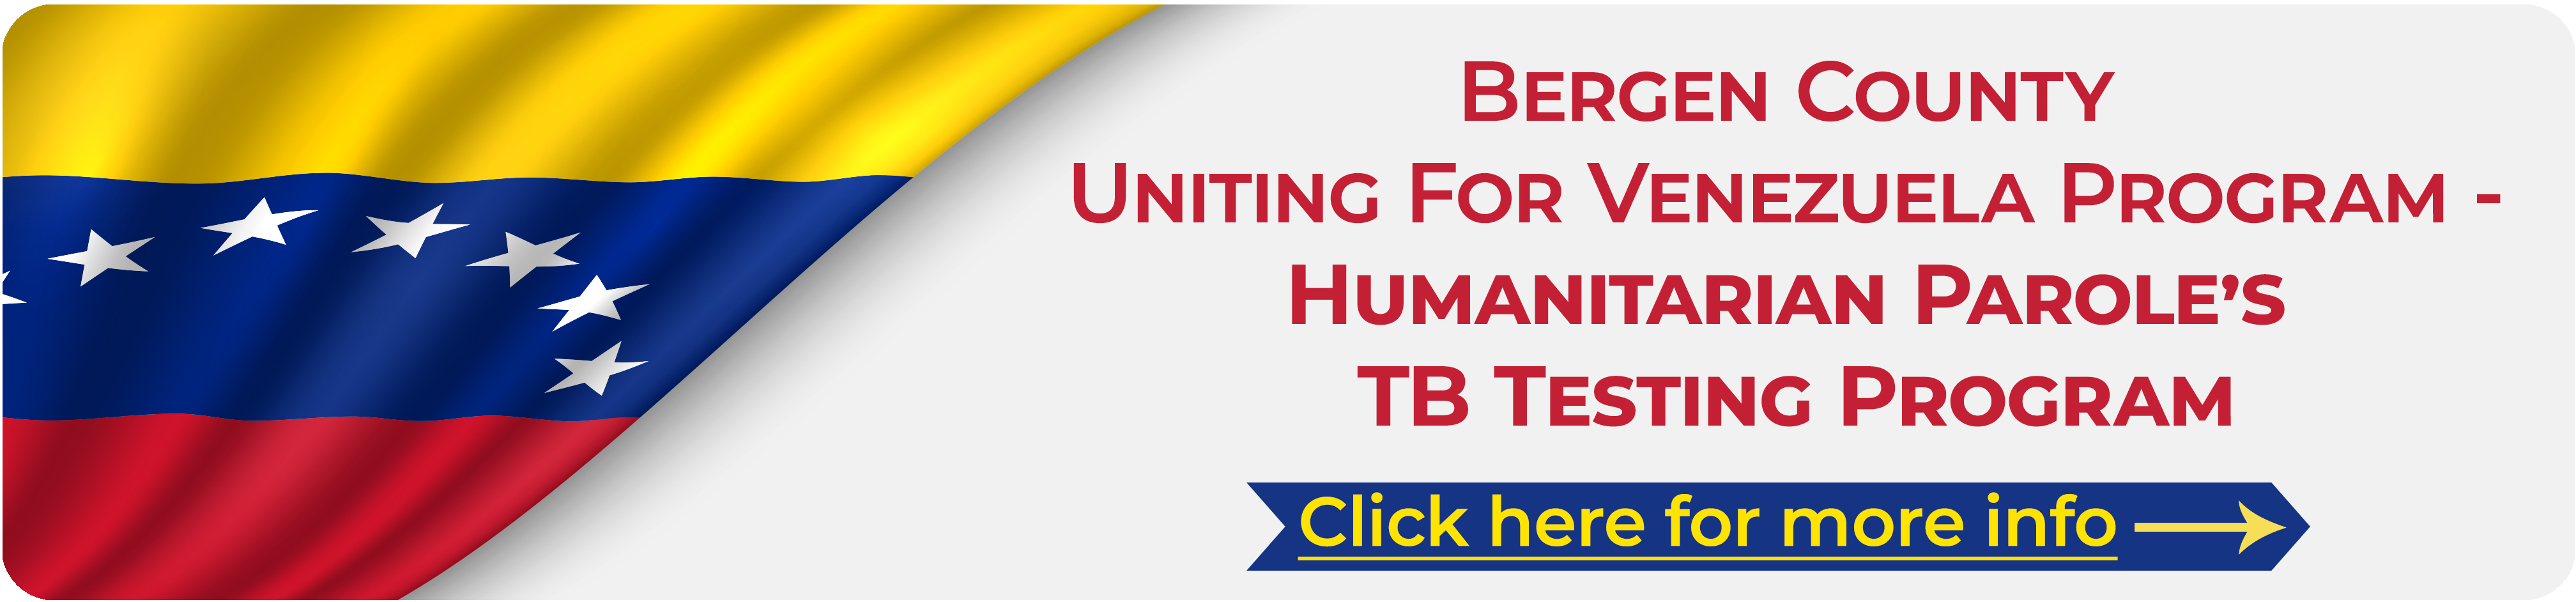 Program-Humanitarian Parole's TB Testing Program